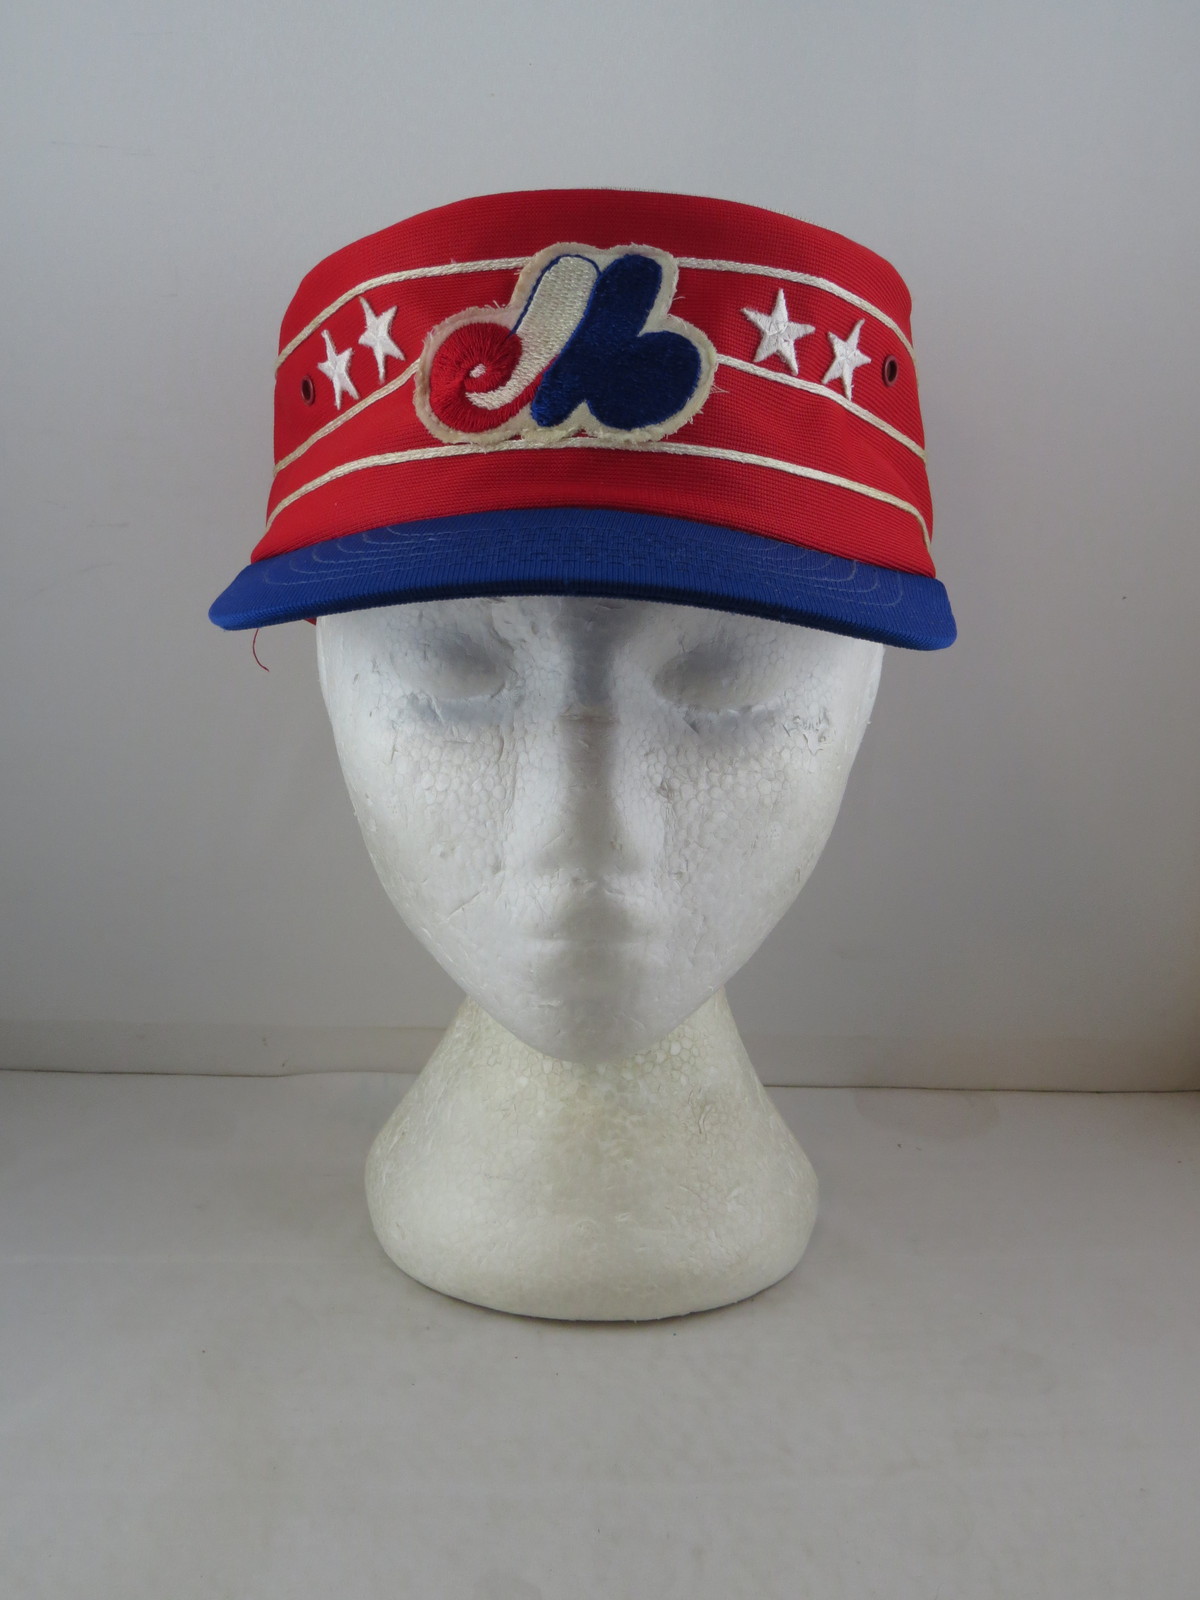 Toronto Blue Jays Vintage 90s Annco Snapback Hat Baseball Blue Red Cap